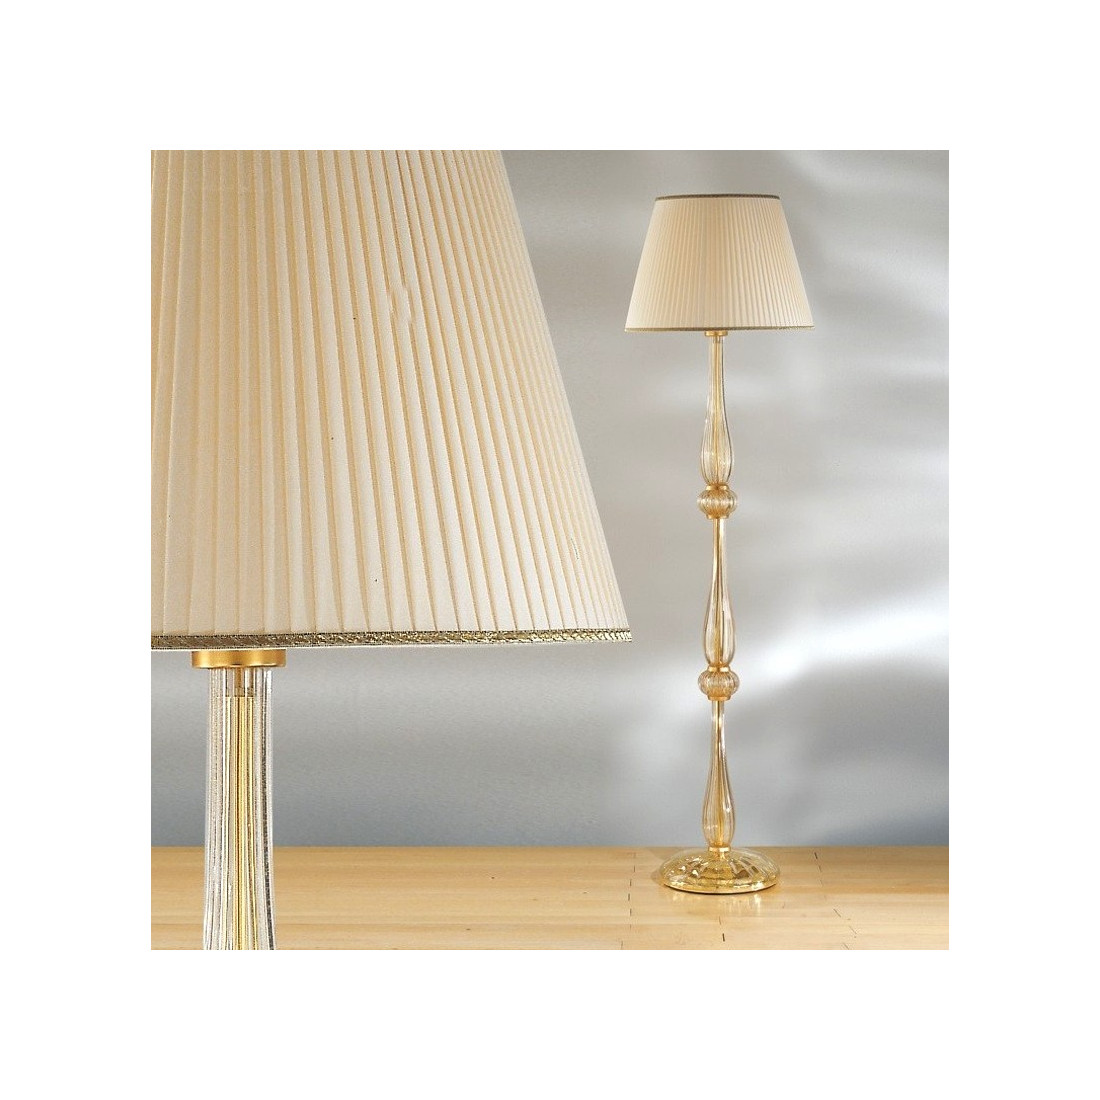 Lampadaire DP-2327 E27 53W lampadaire Murano classique avec abat-jour en tissu